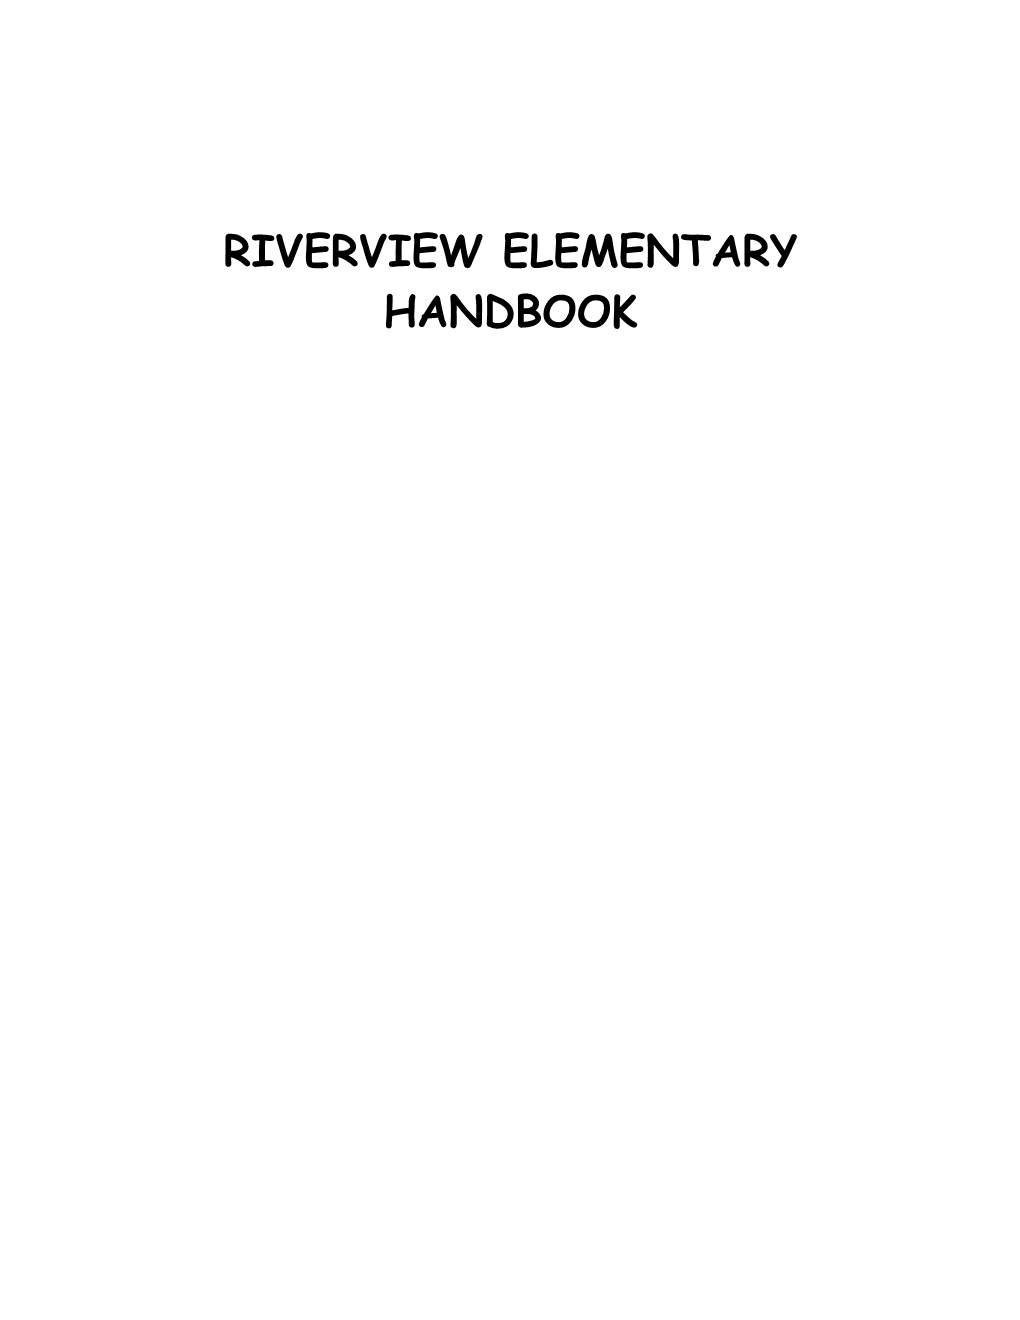 Riverview Elementary Handbook